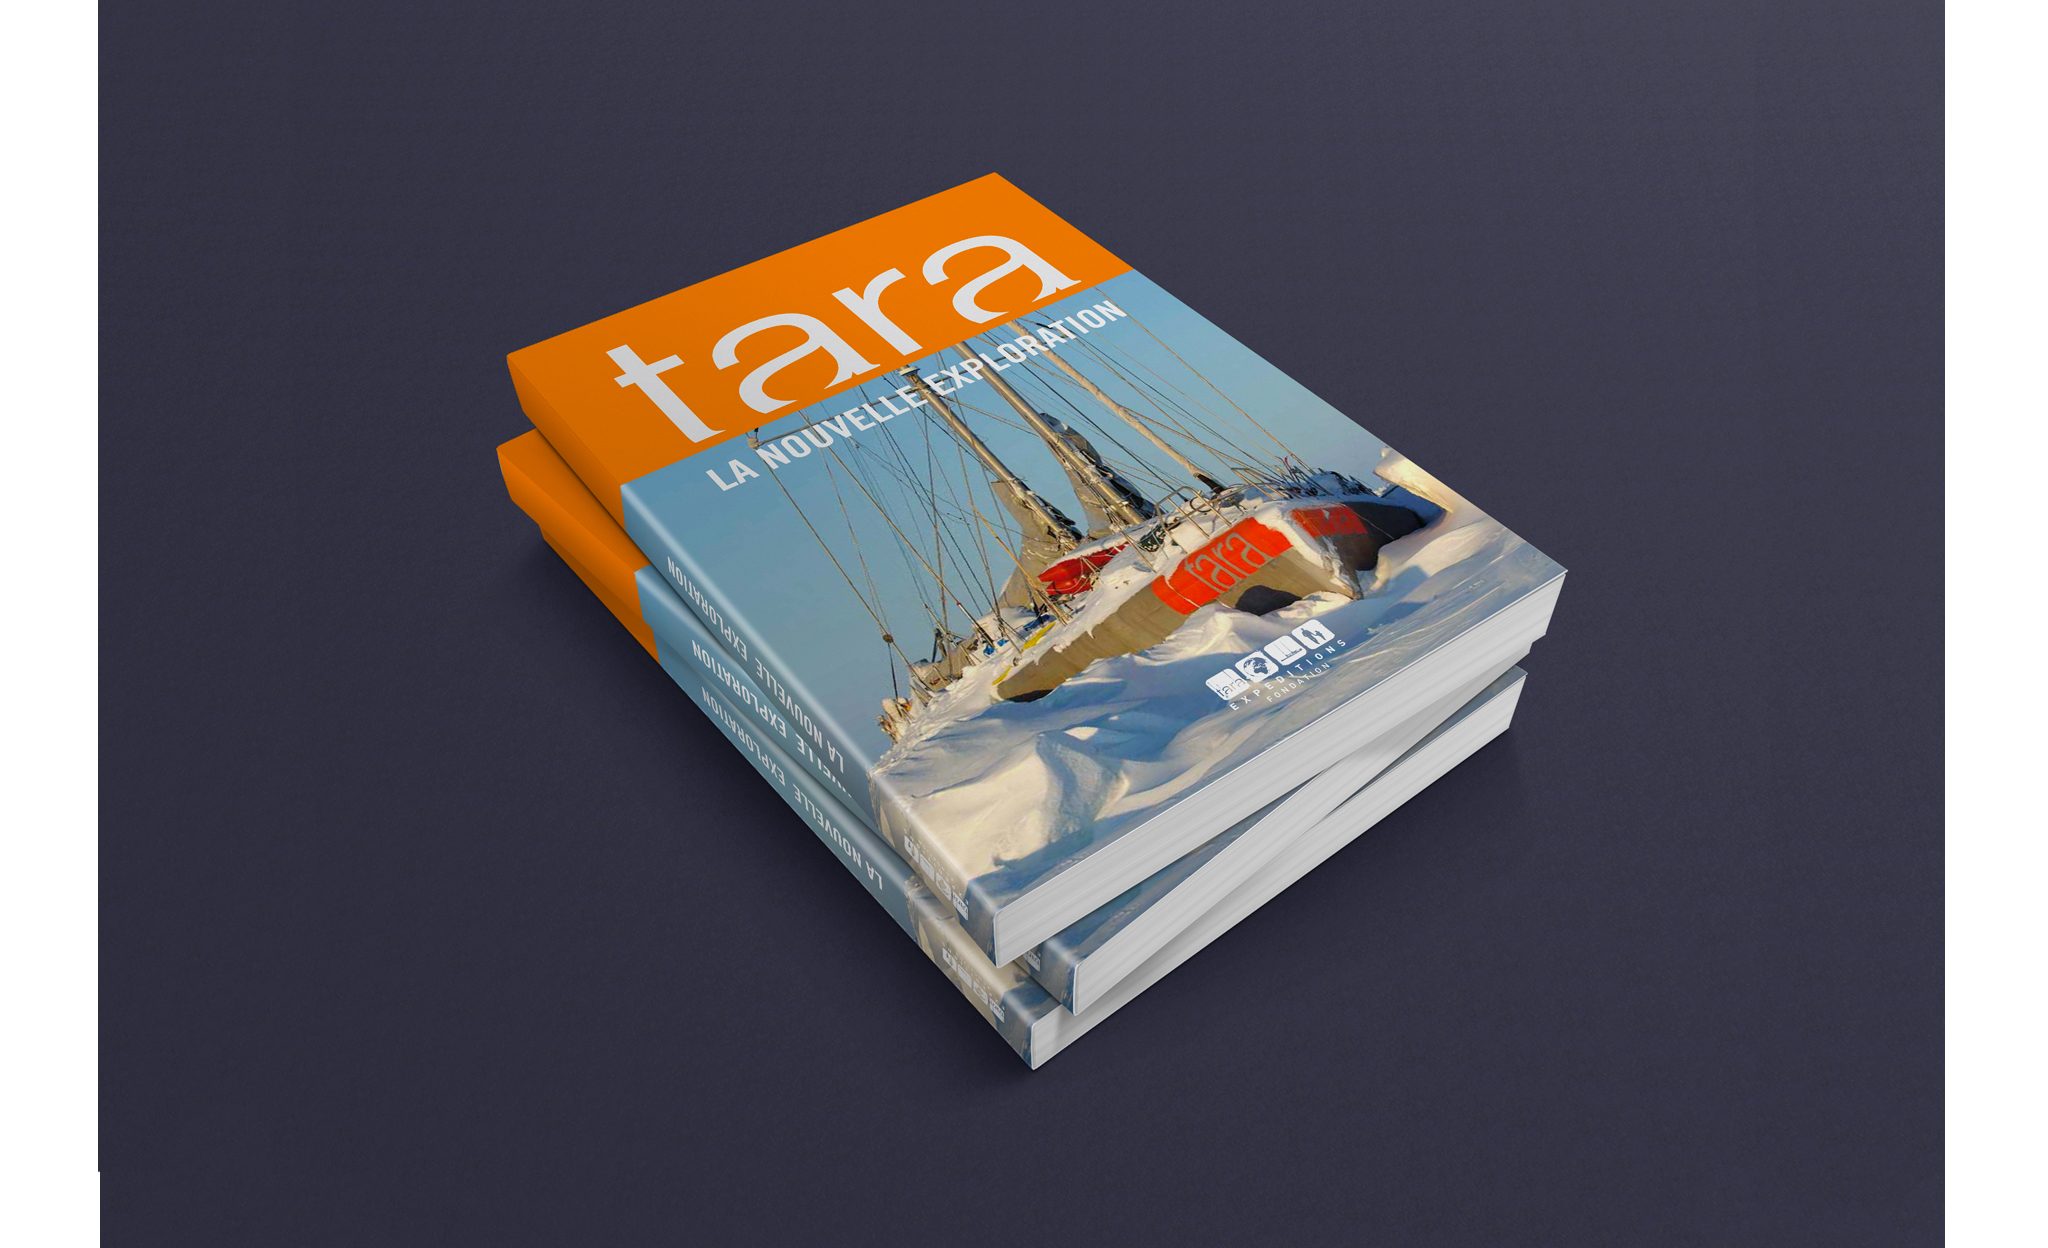  | Tara | Book « Tara – the dawn of modern exploration » | 1